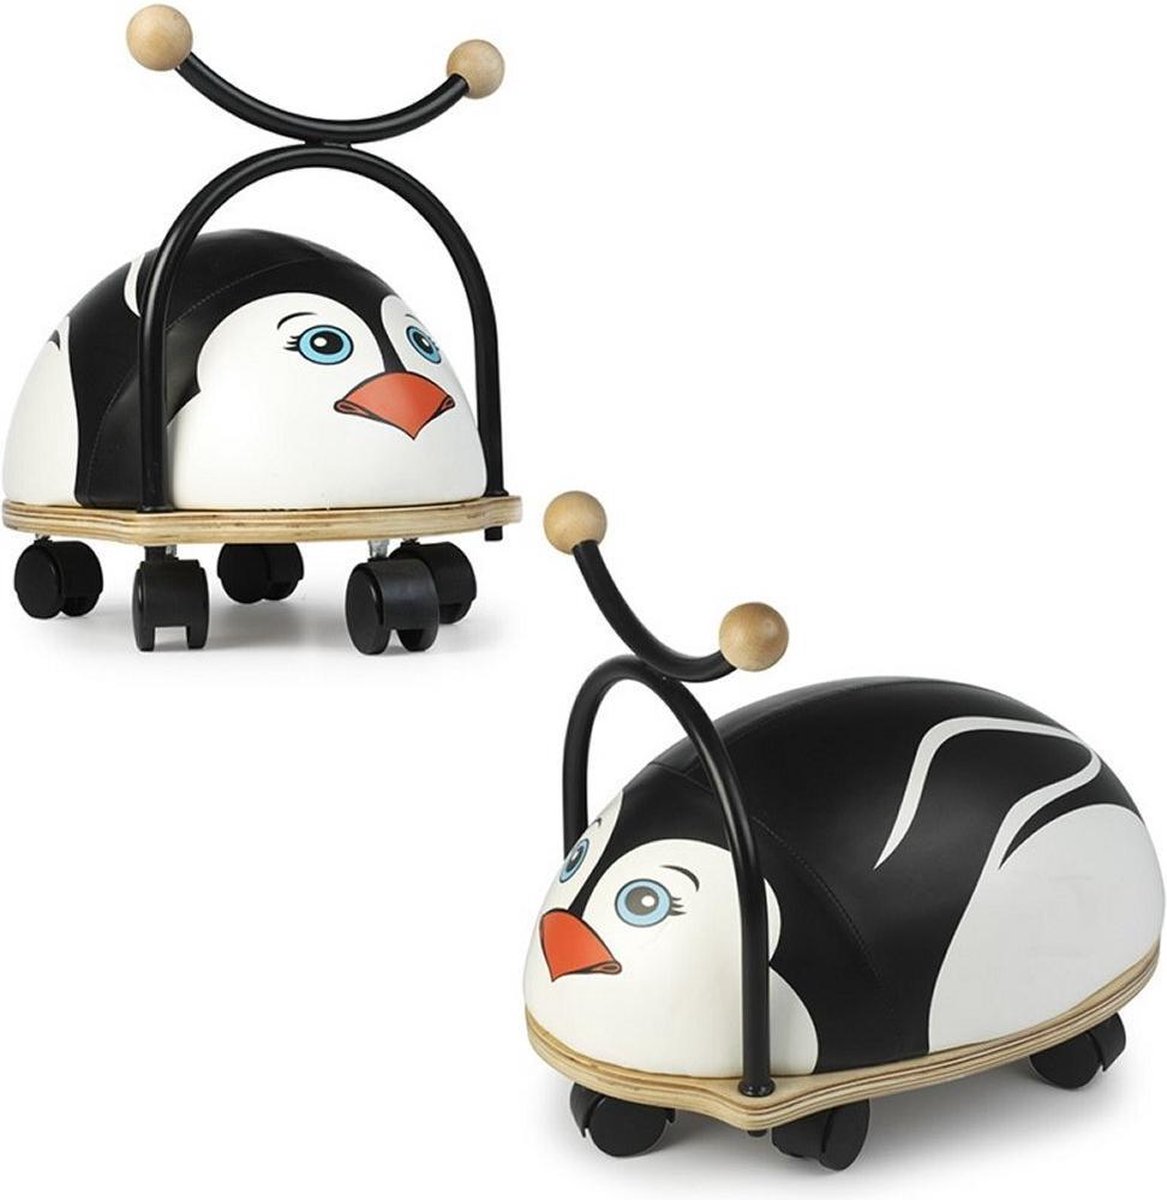 Simply for Kids 36089 Houten Ride On Pingu